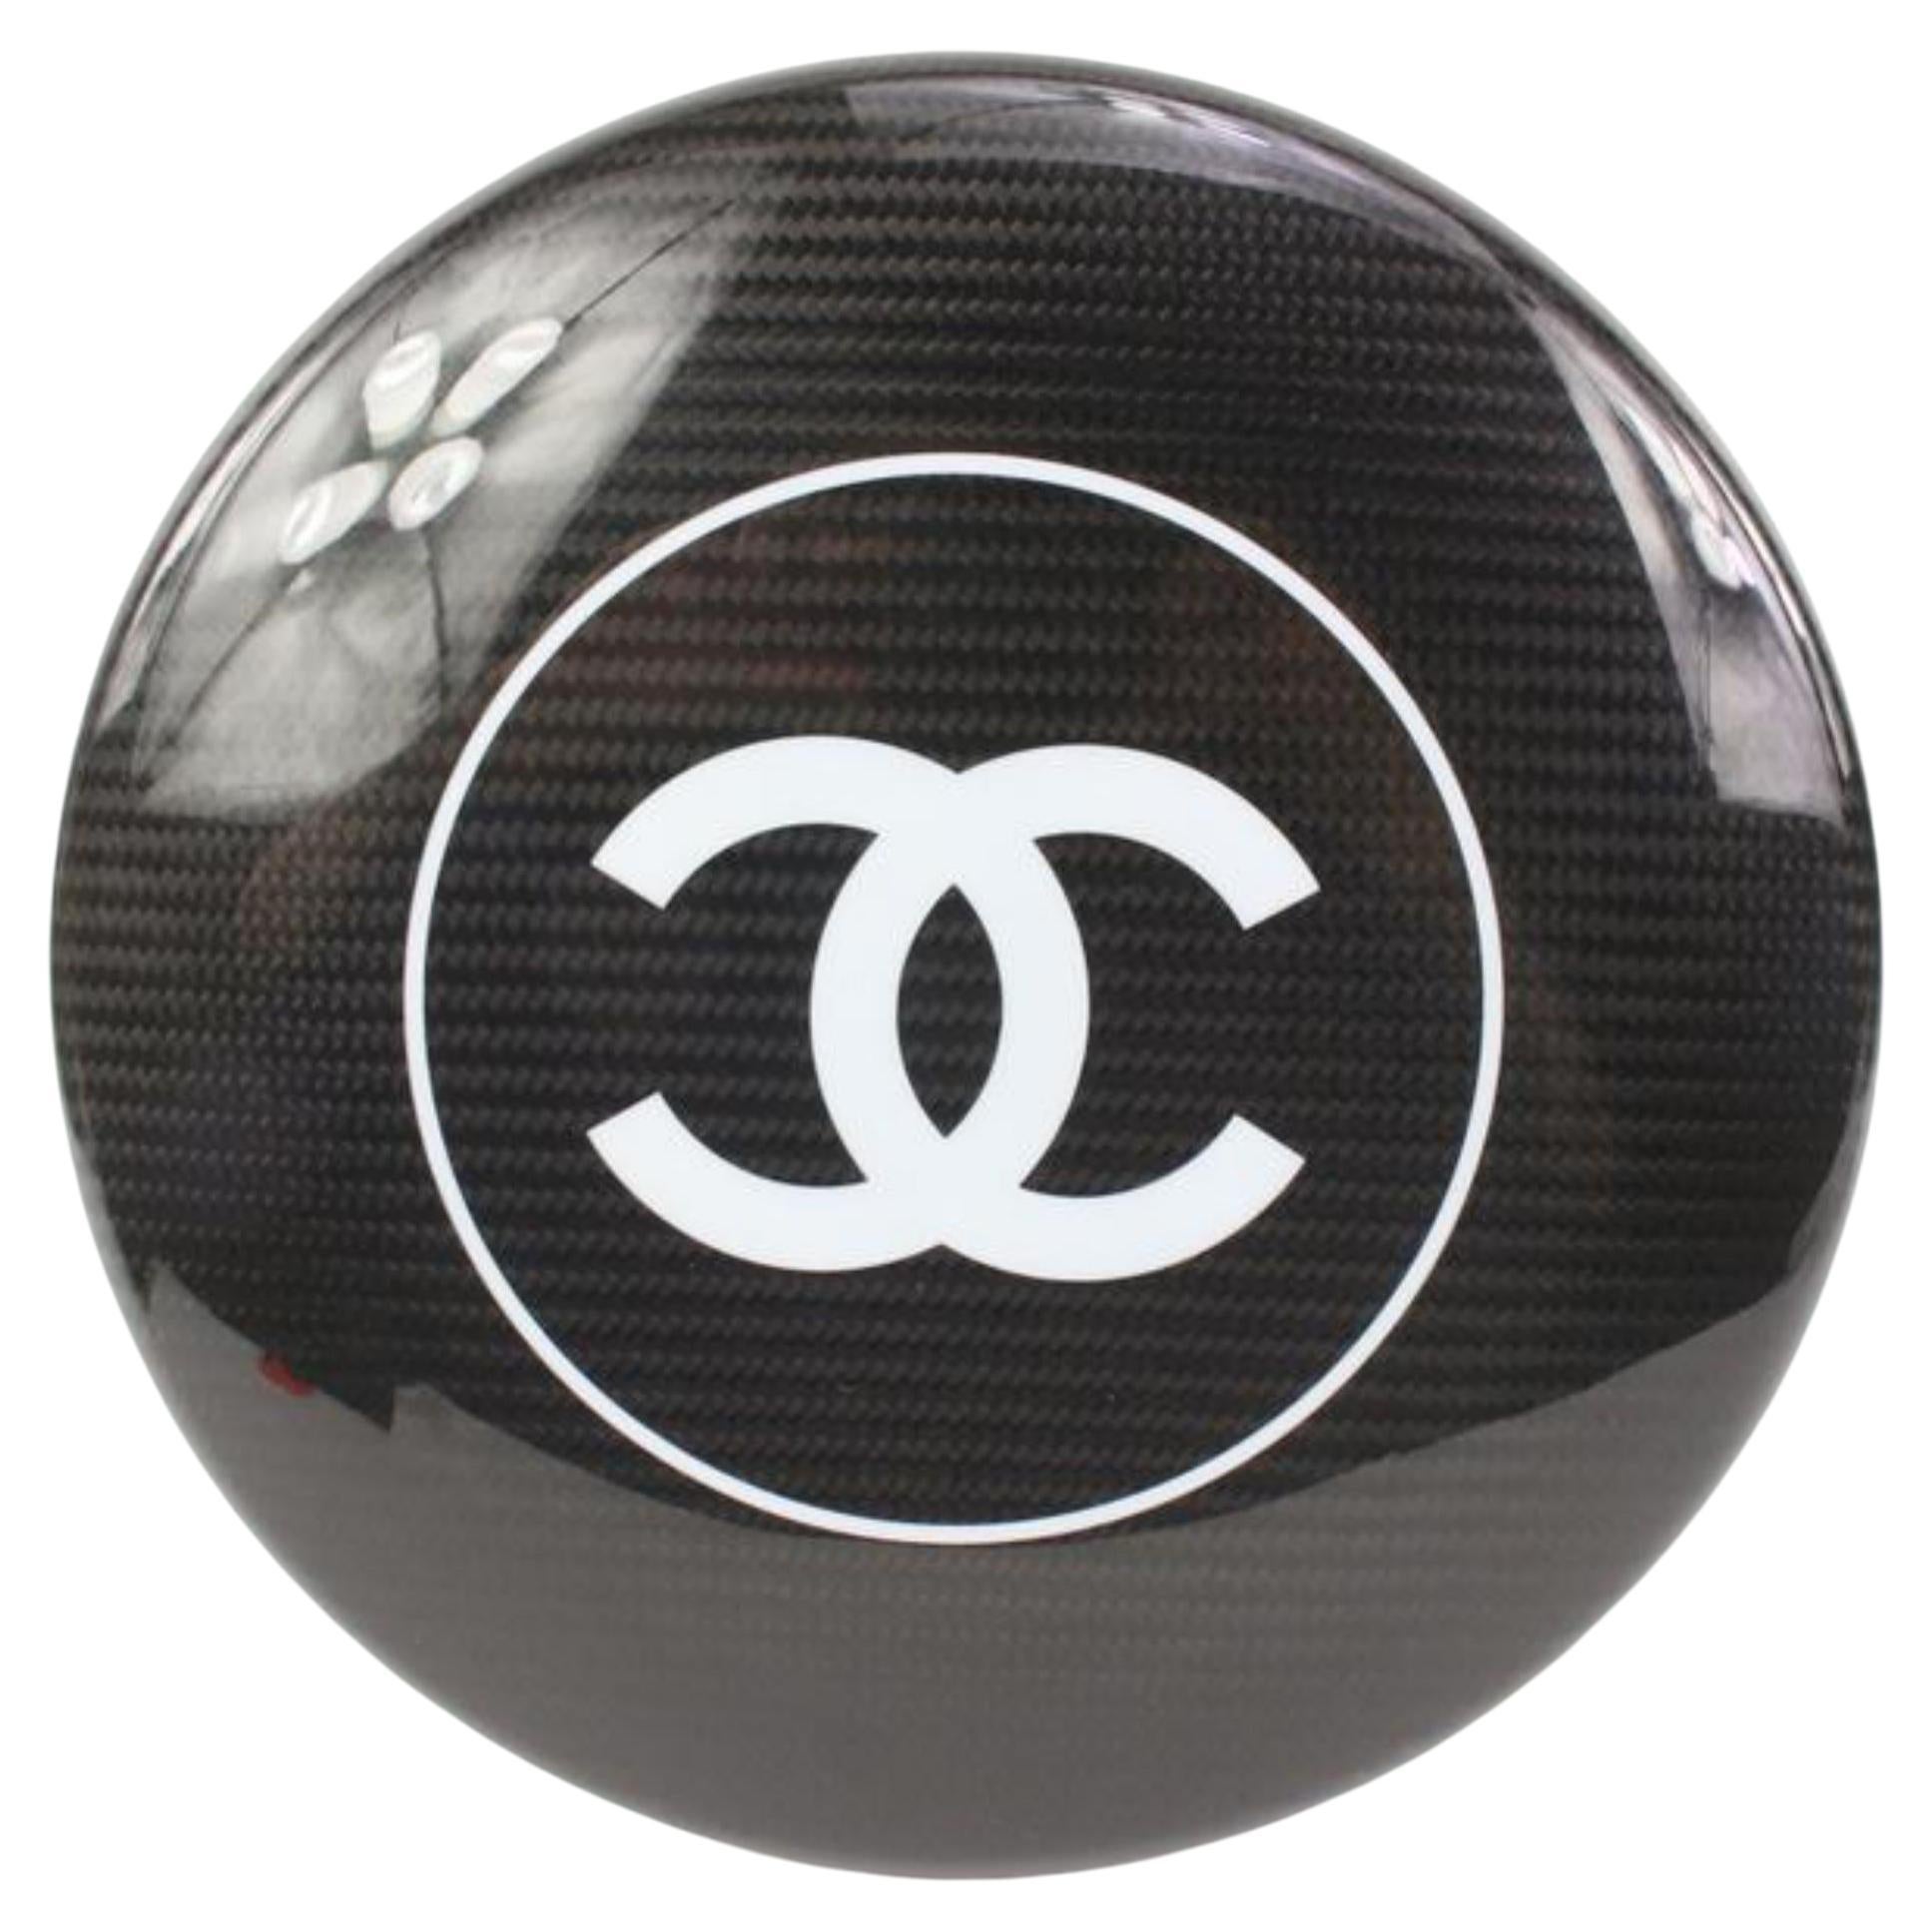 Chanel 22S Schwarzer Kohlenstofffaser CC Logo Frisbee Disc  34ck311s